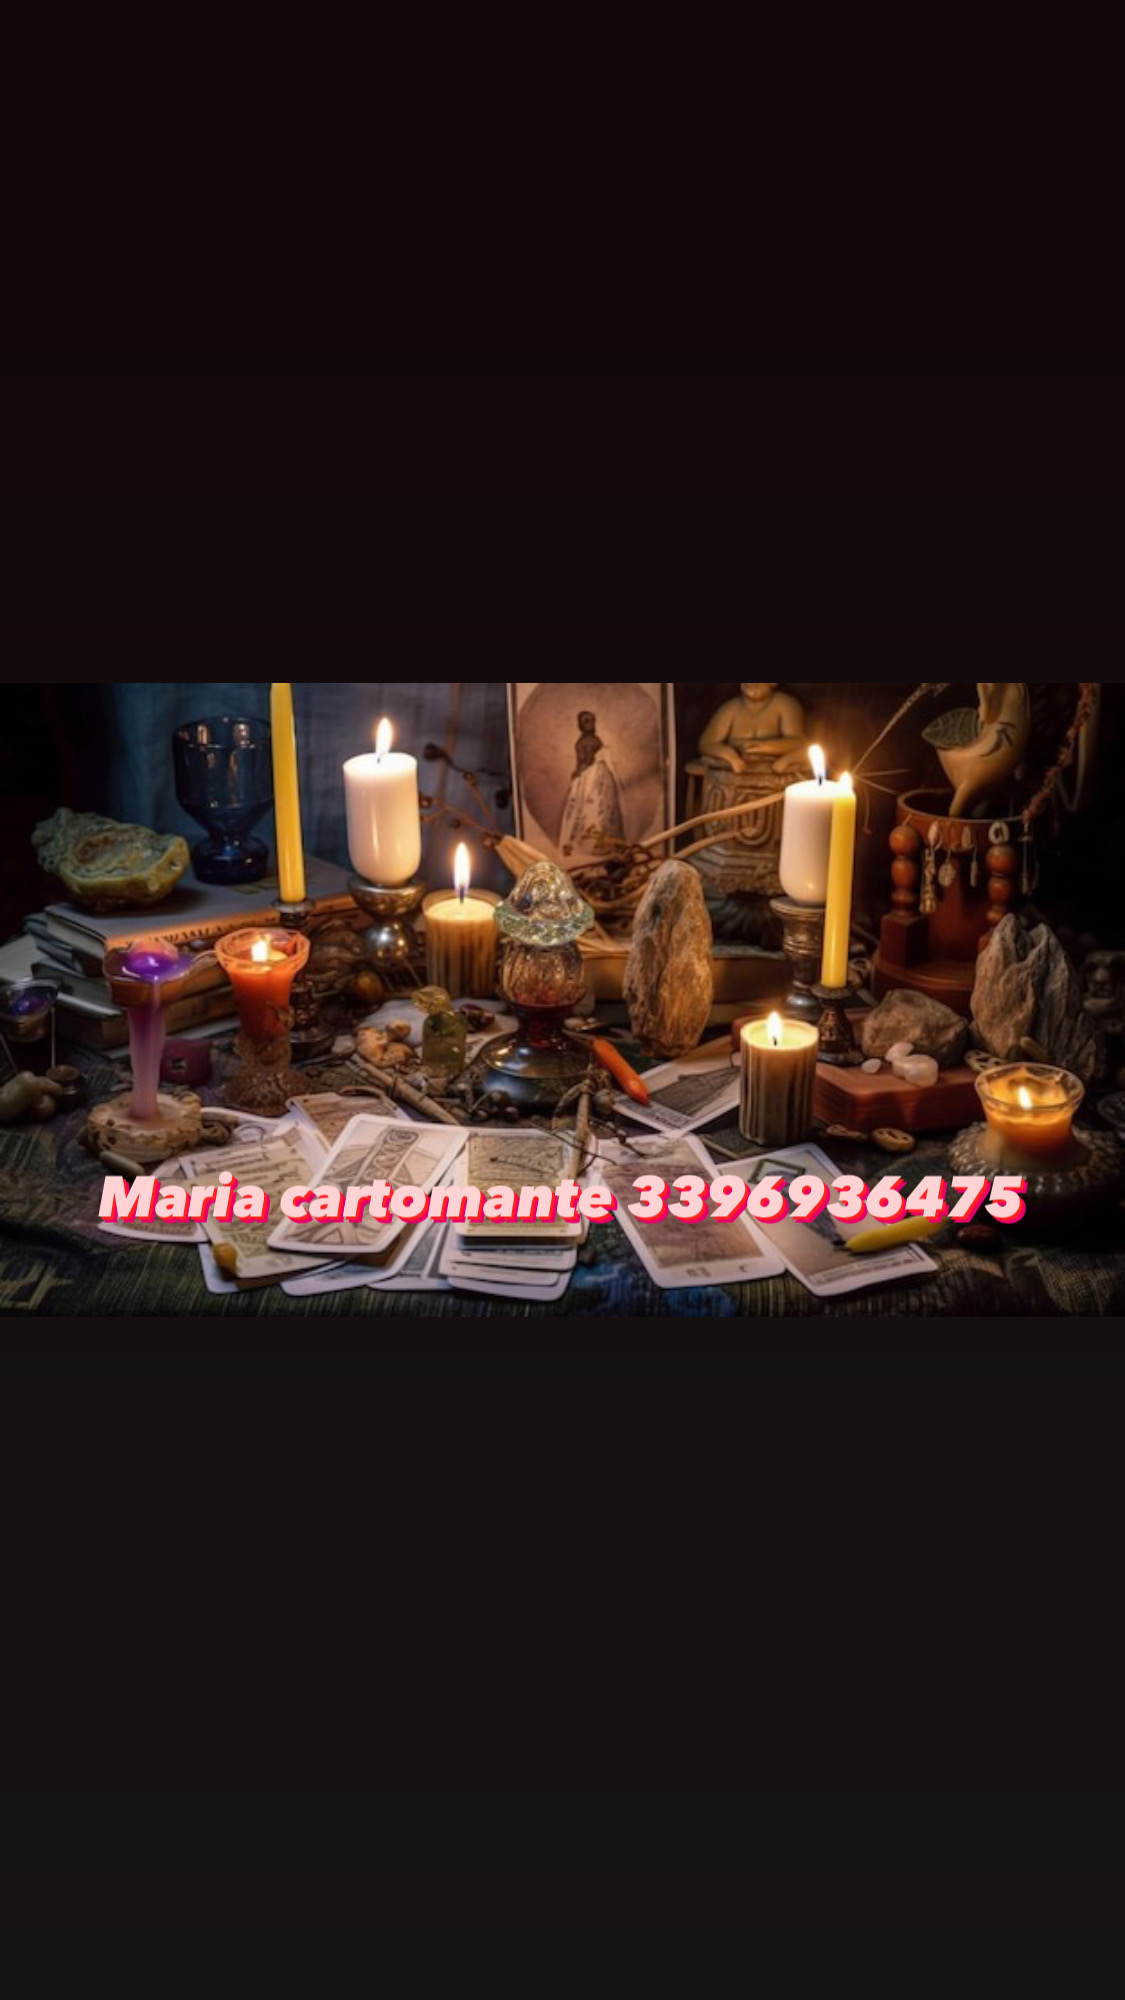 Maria veggente 3396936475